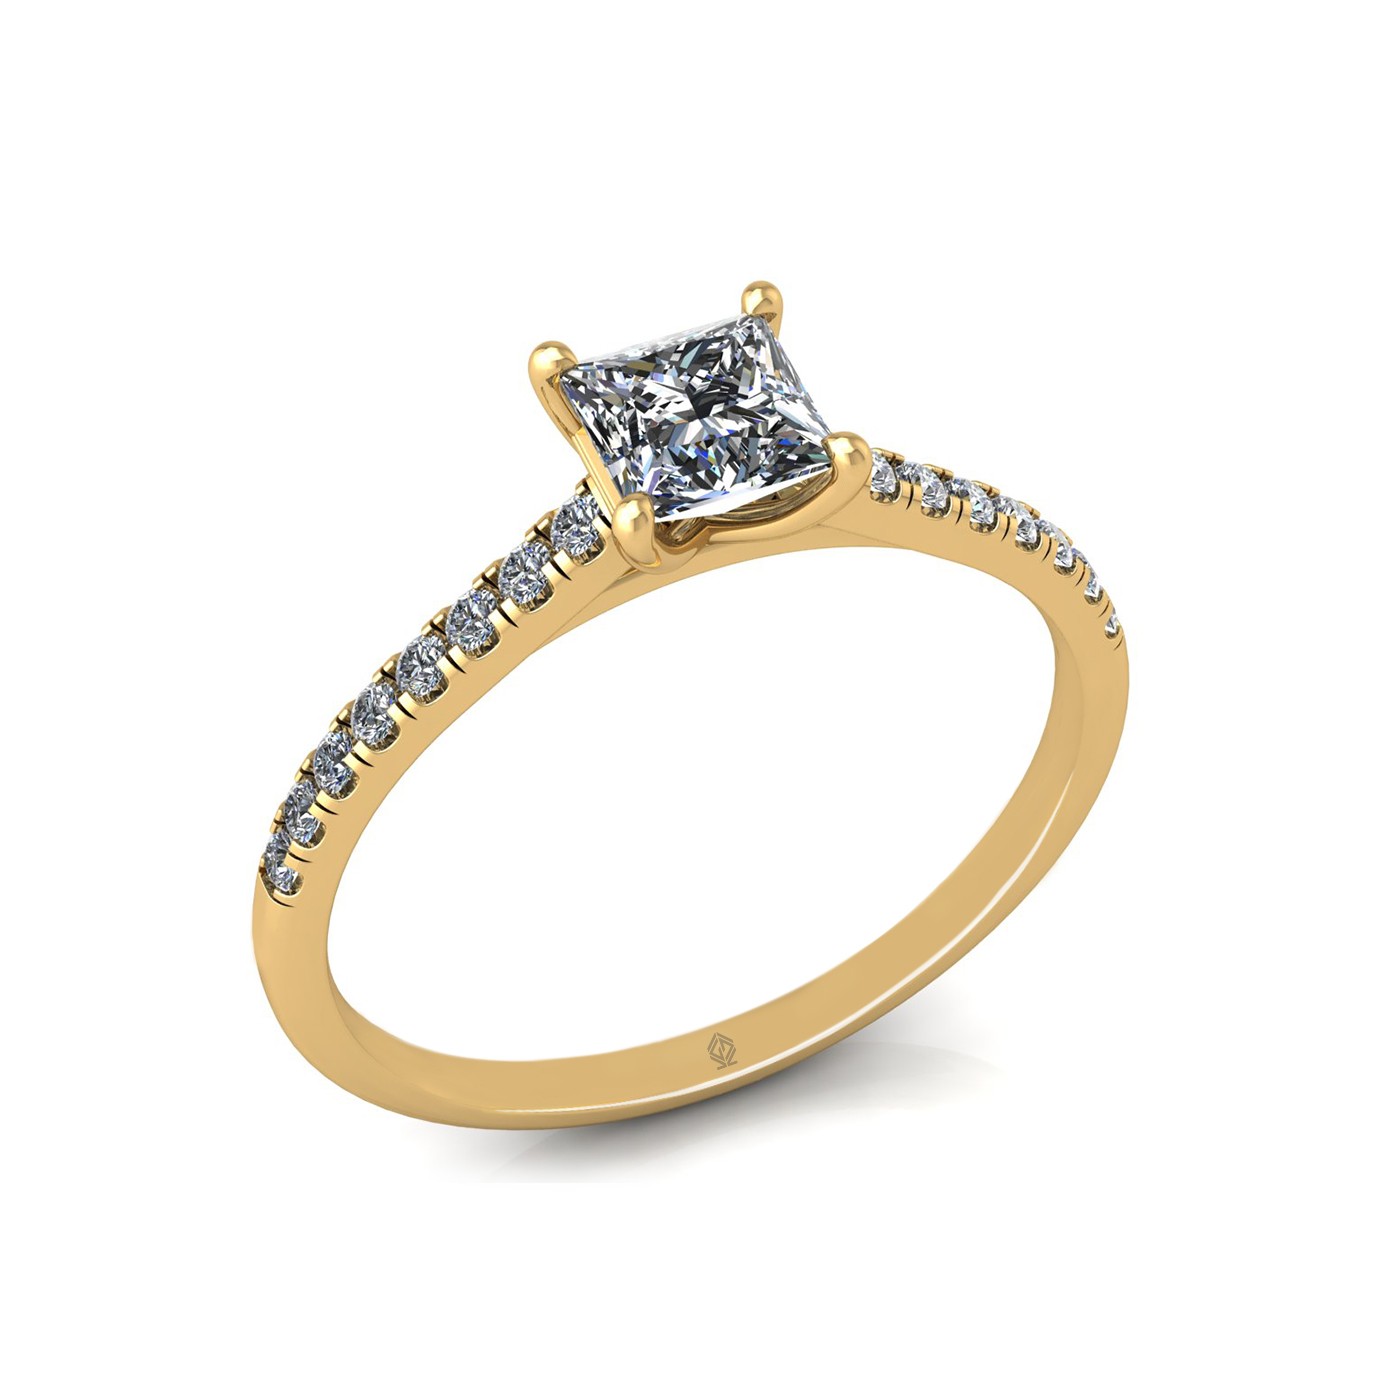 18k yellow gold  0,50 ct 4 prongs princess cut diamond engagement ring with whisper thin pavÉ set band